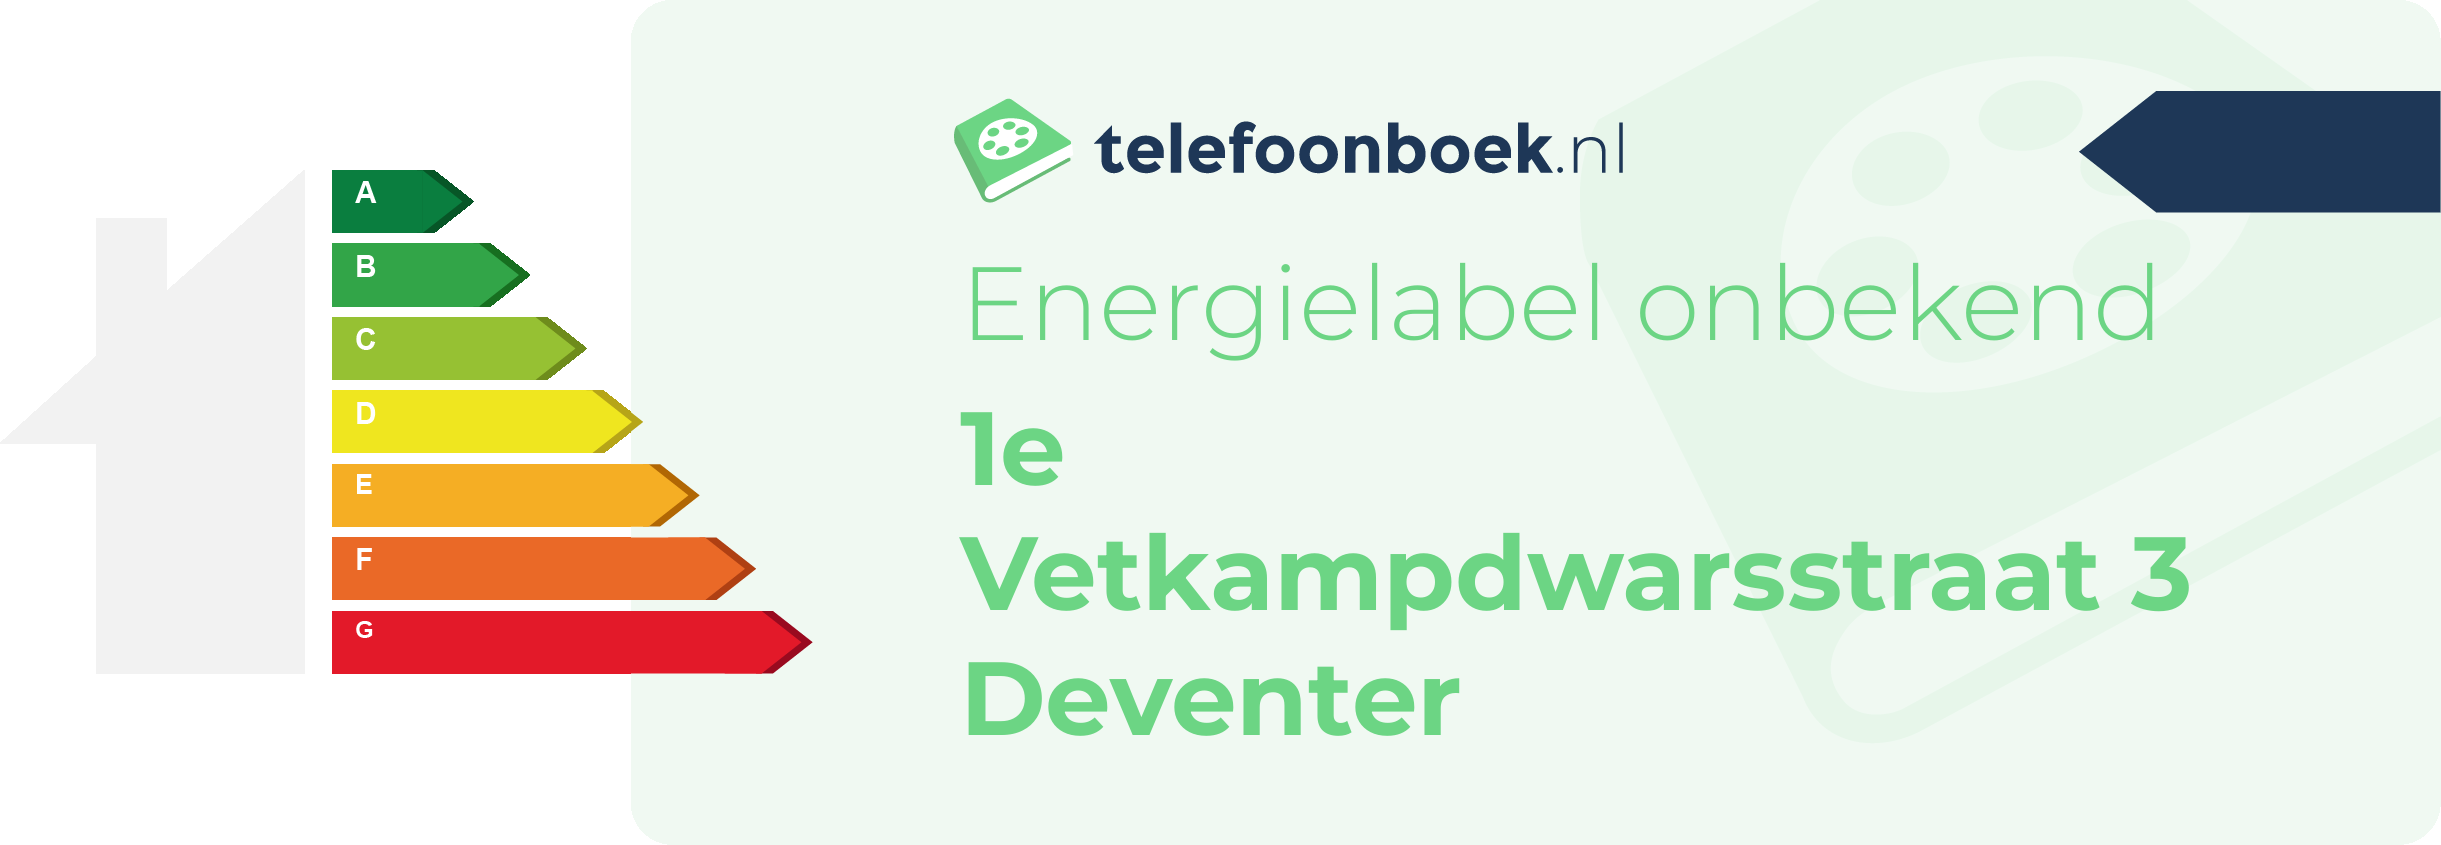 Energielabel 1e Vetkampdwarsstraat 3 Deventer